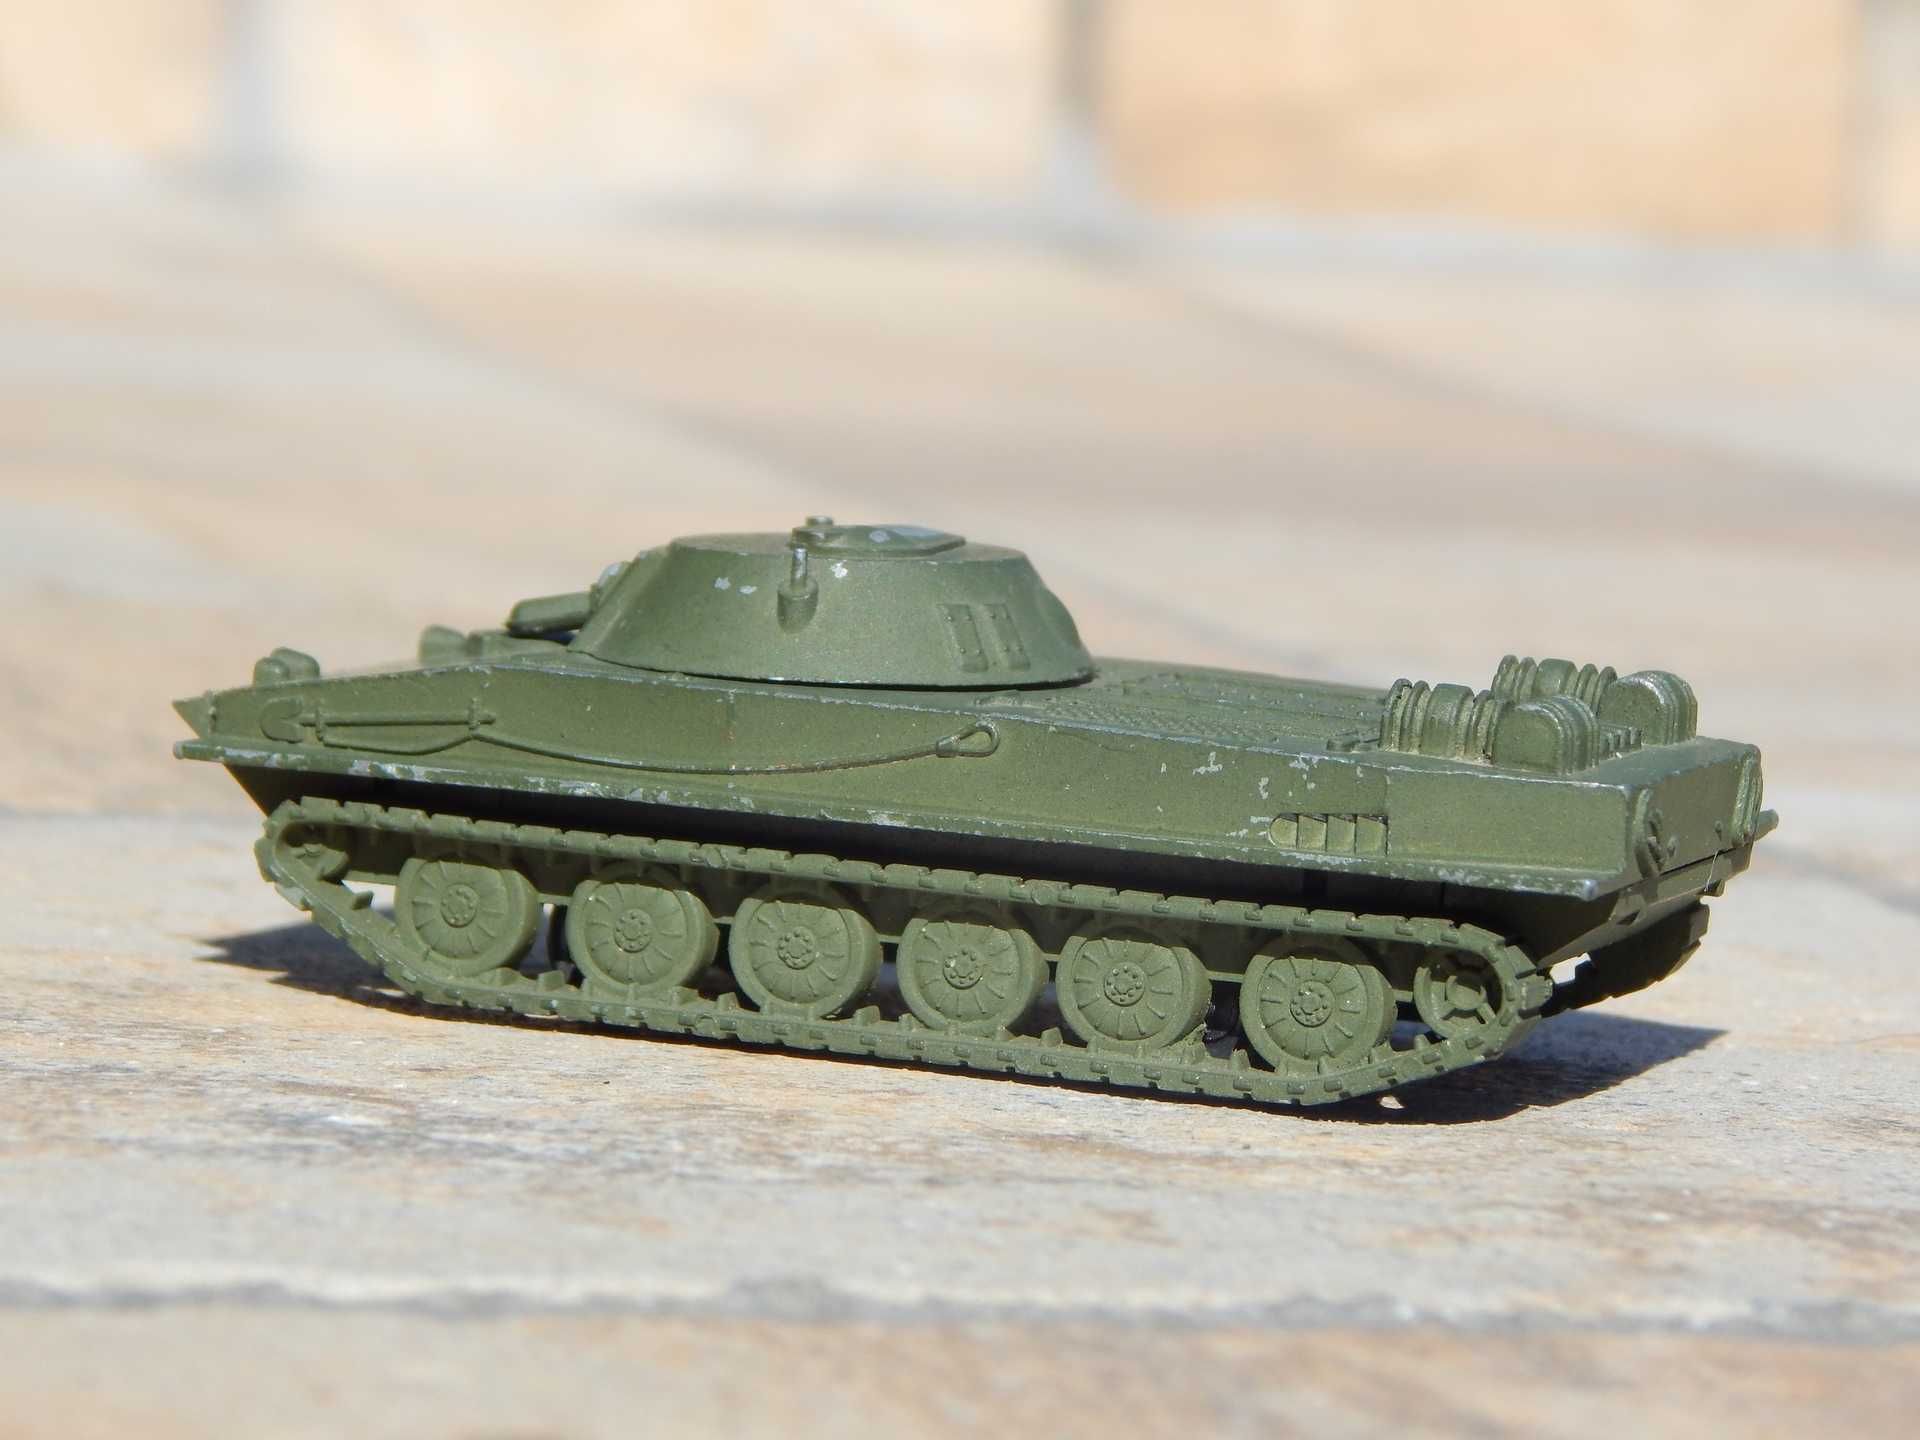 Macheta tanc usor amfibiu PT-76 fab URSS lipsa tun turela sc 1:72